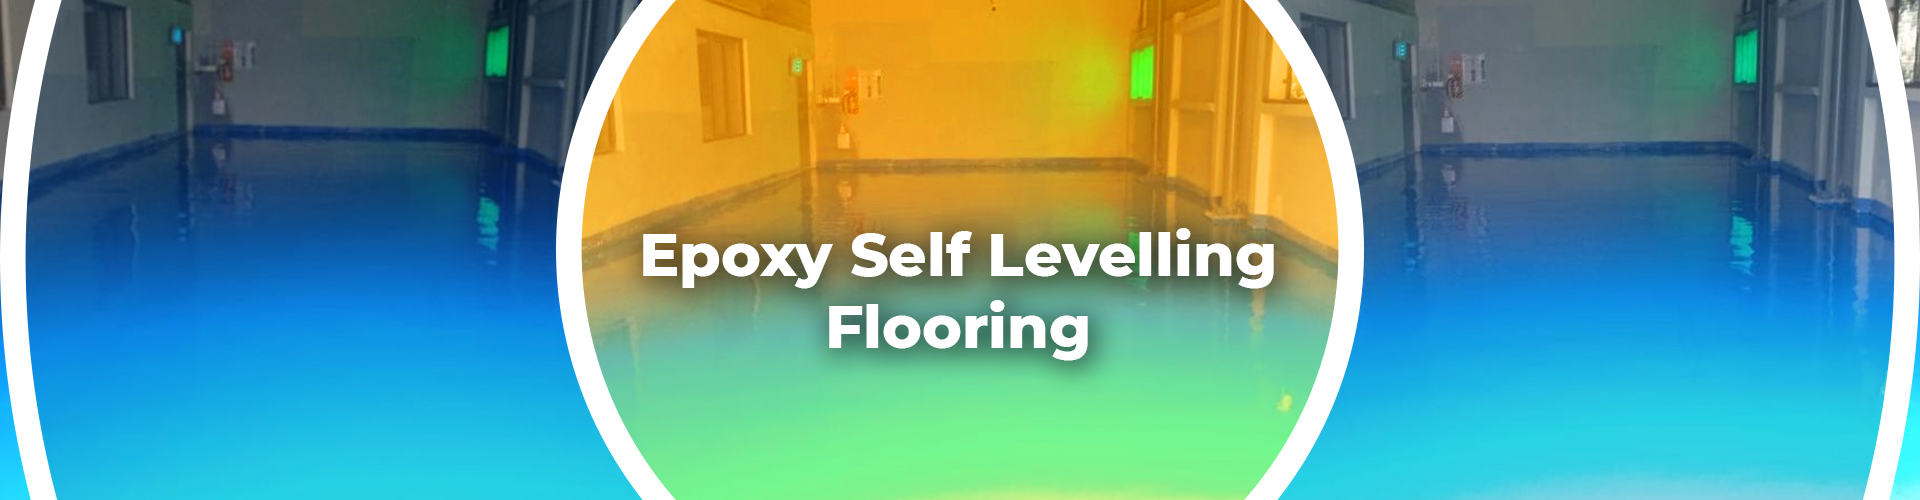 Epoxy Self Levelling Flooring